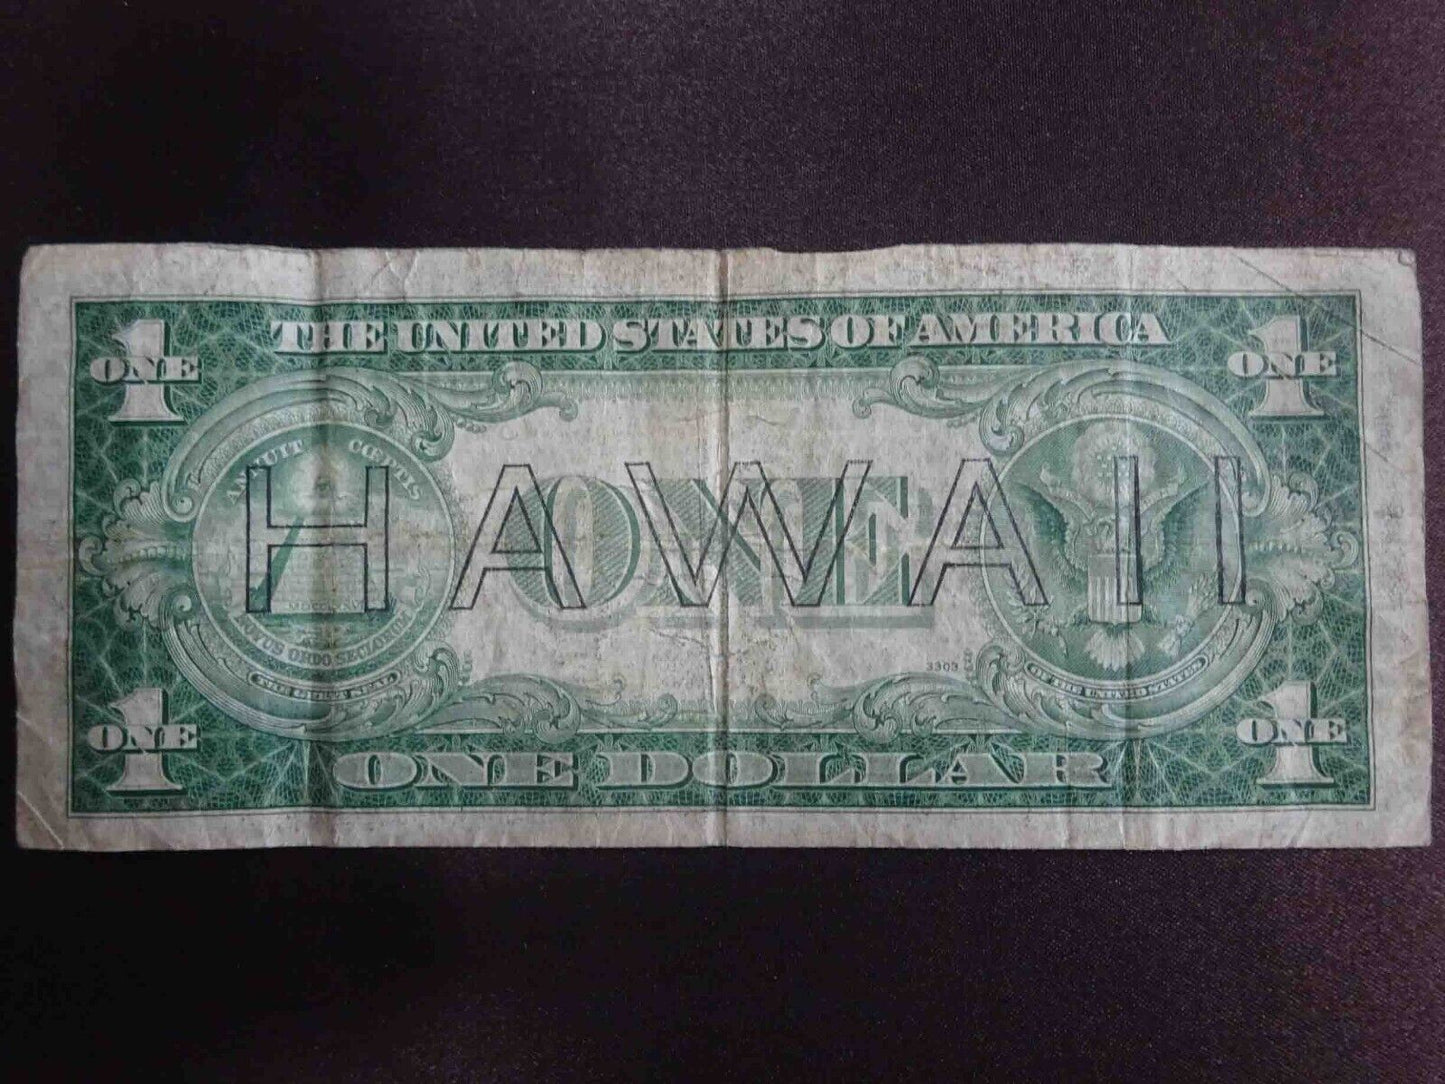 1935A Hawaii $1 Silver Certificate S42056136C